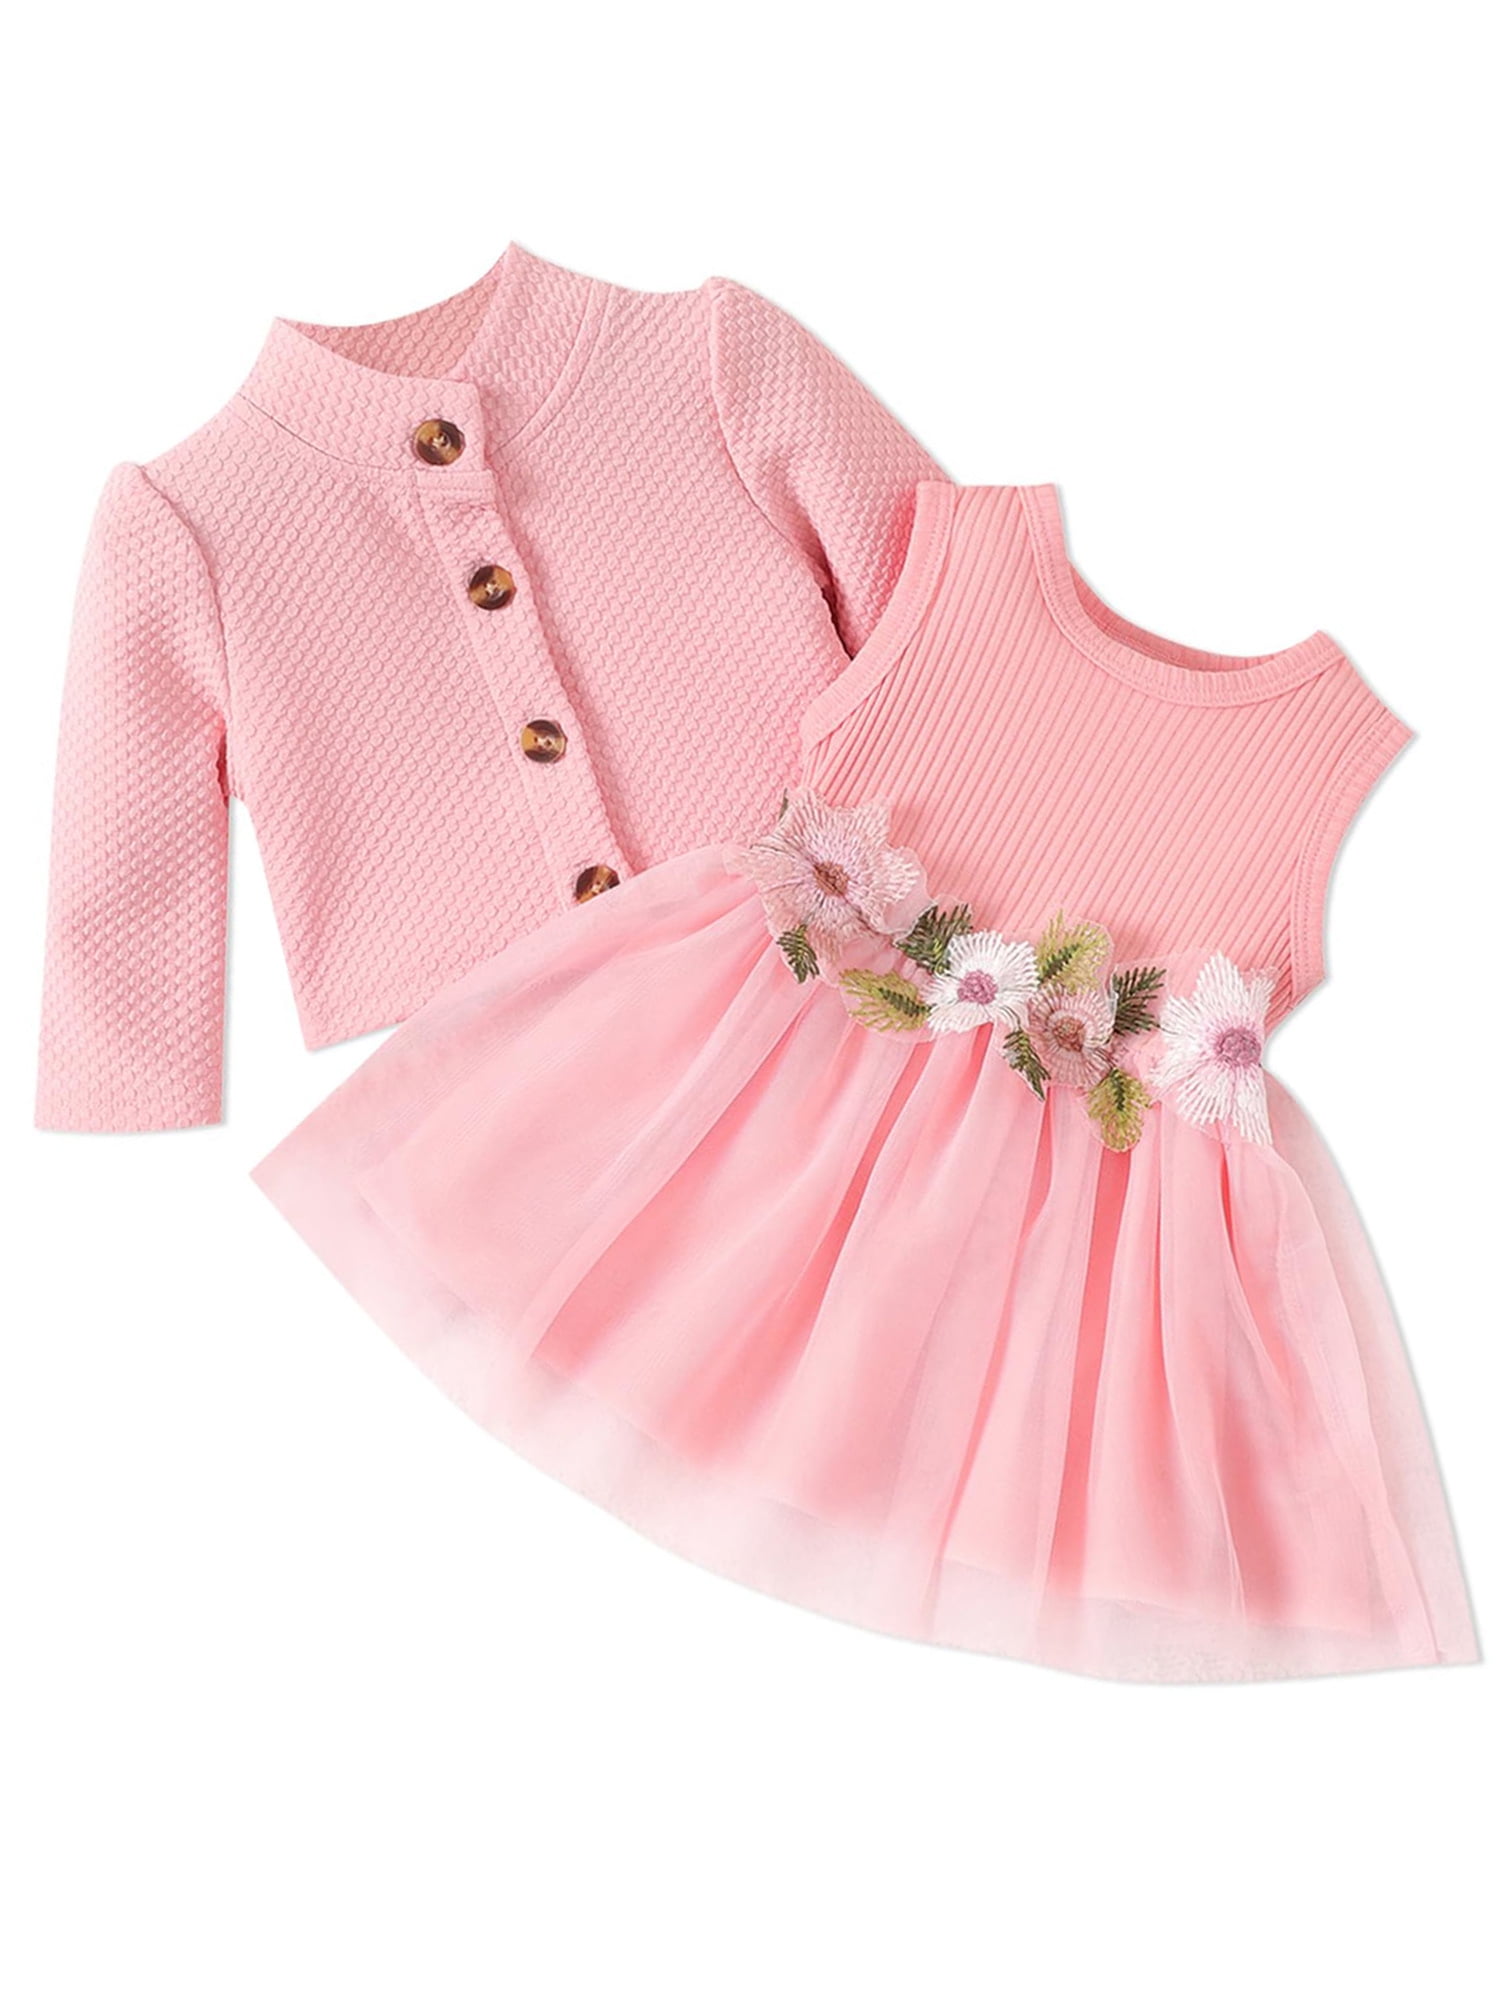 inhzoy Toddler Girls Flower Dress with Cardigan Sets Little Princess ...